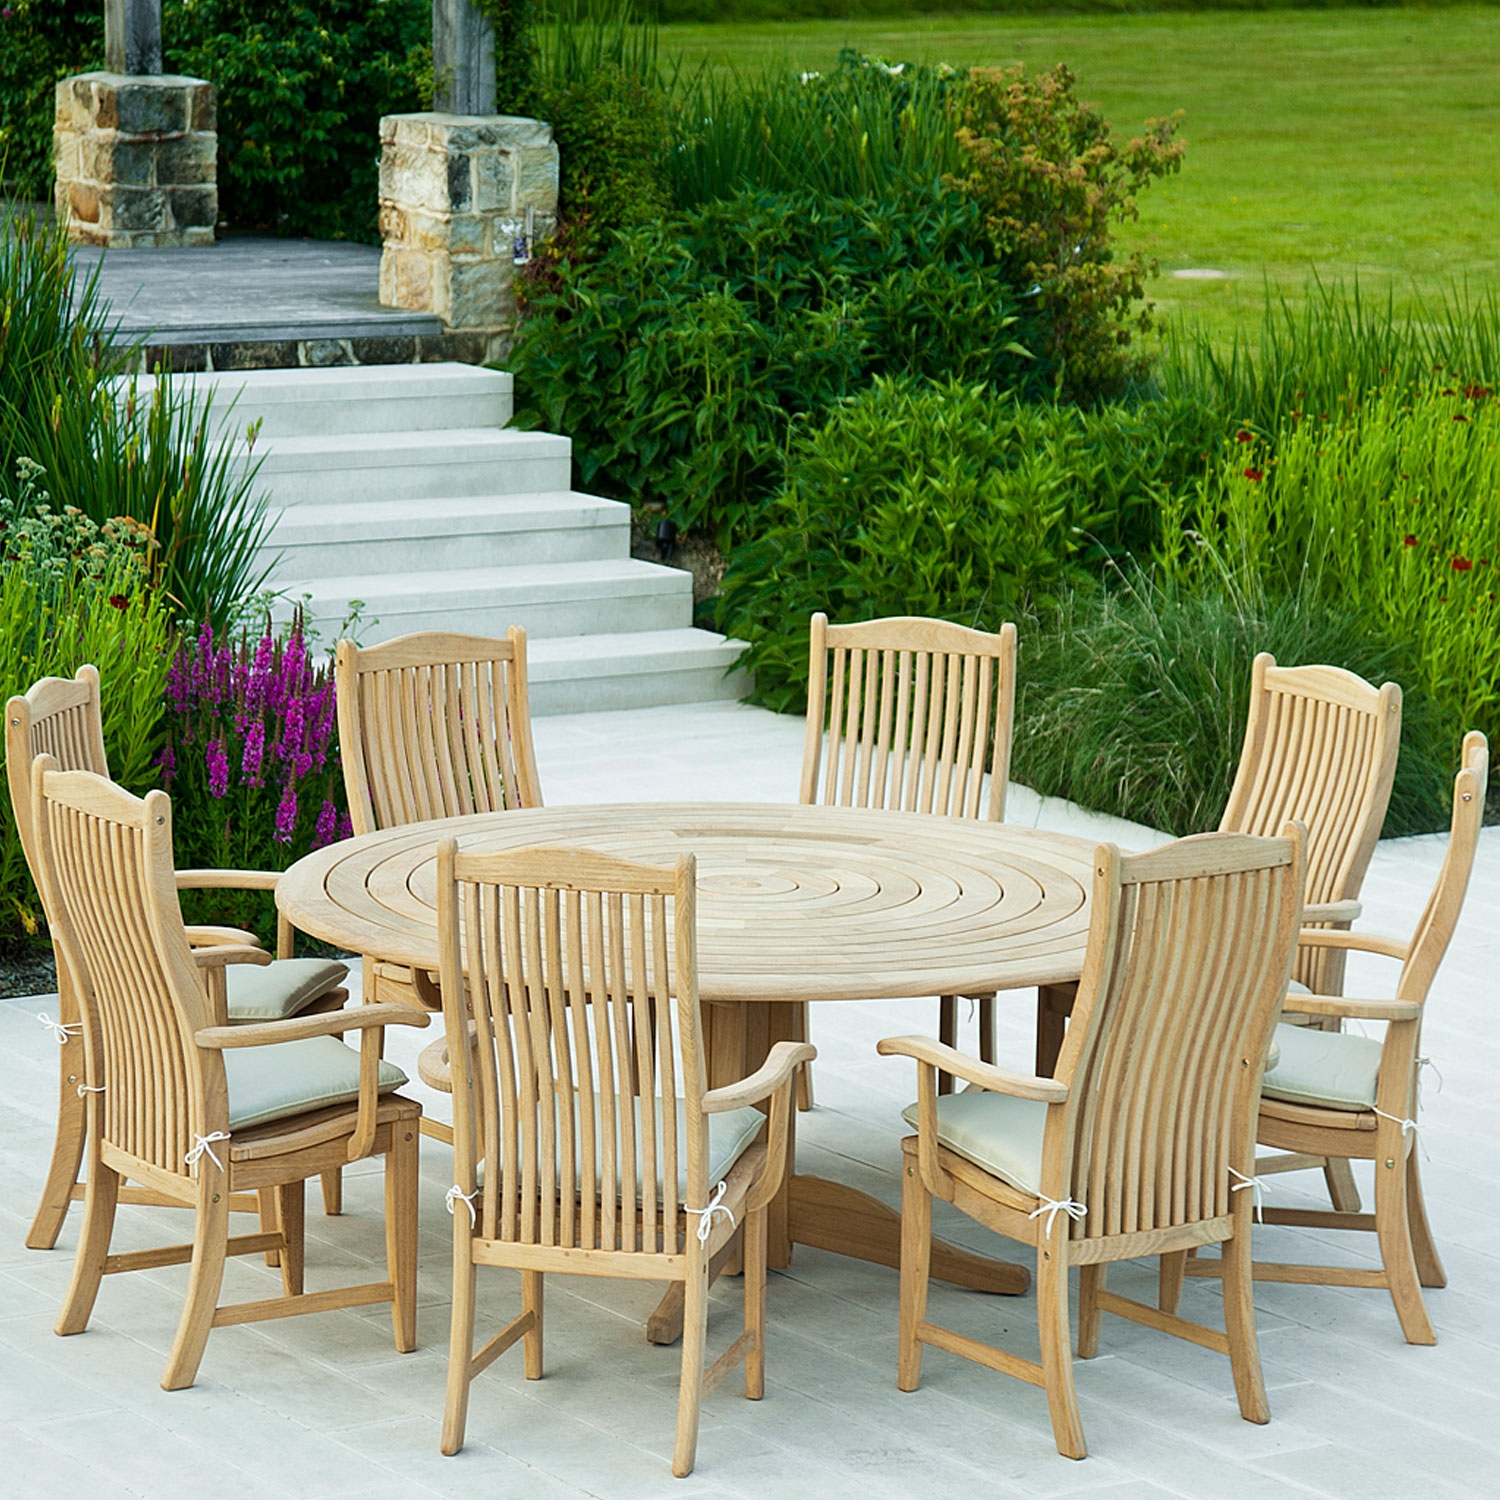 Bengal Pedestal Round Garden Table, Wooden Round Garden Table And Chairs Set